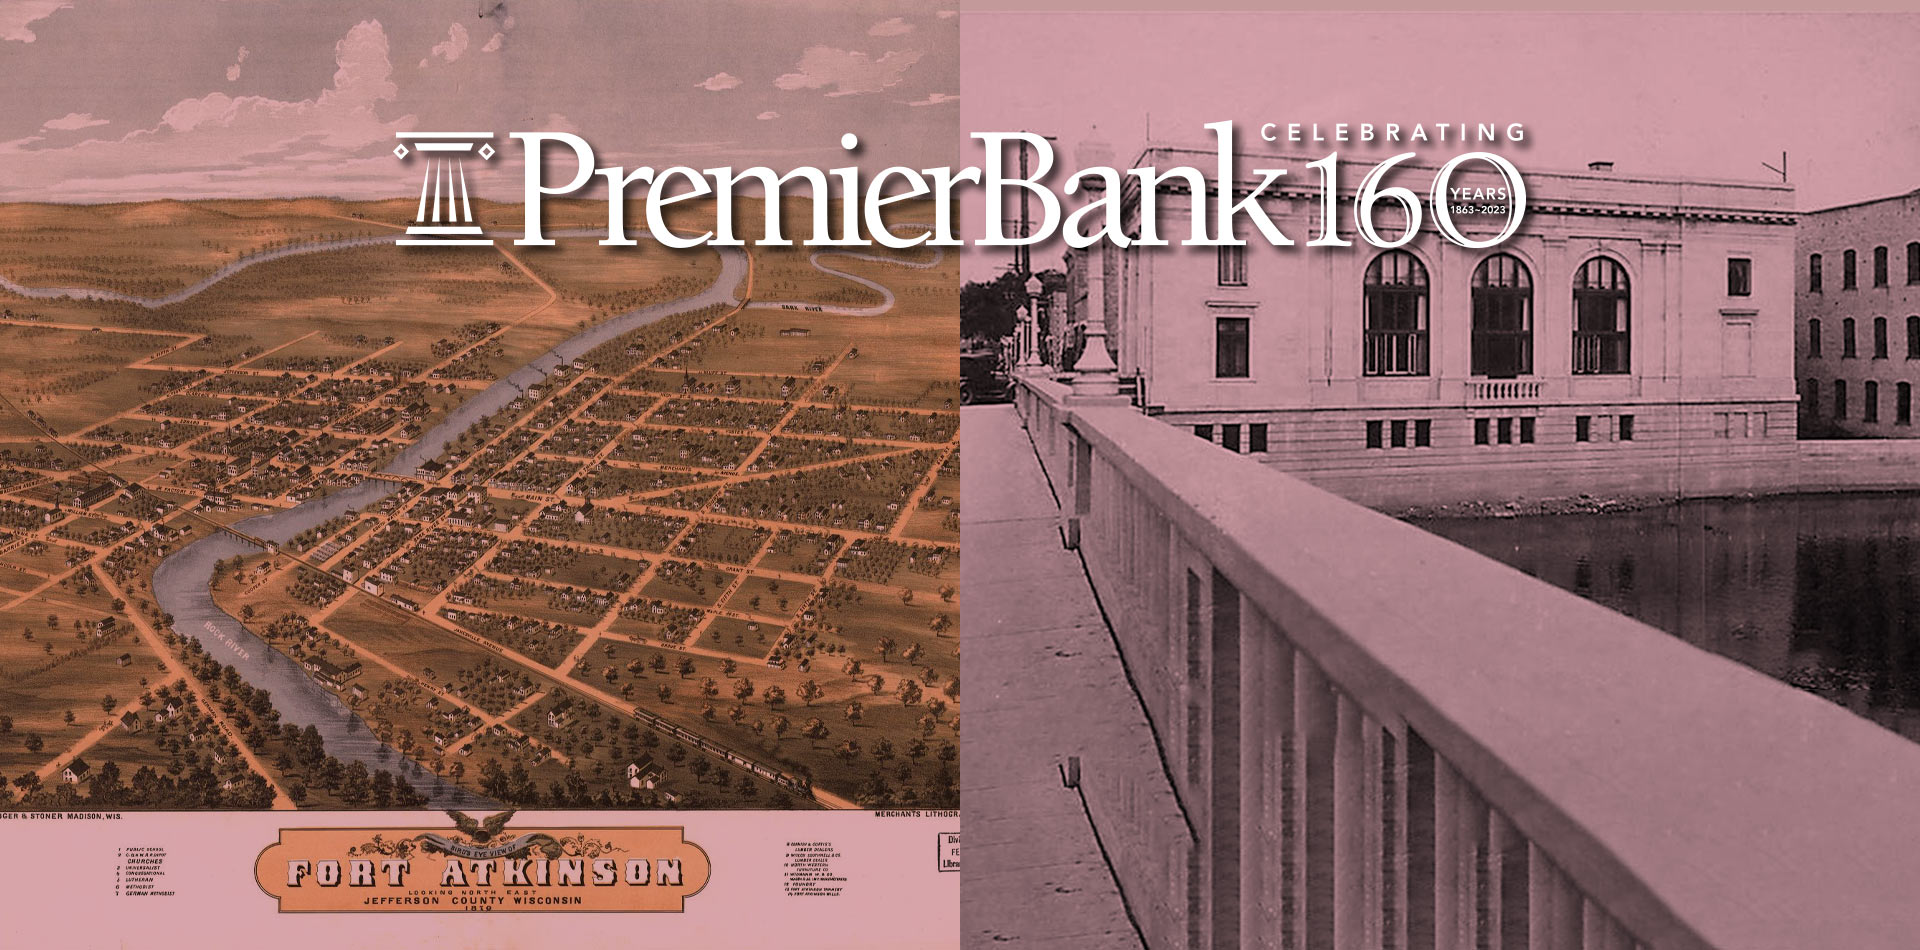 PremierBank Celebrates 160 Years